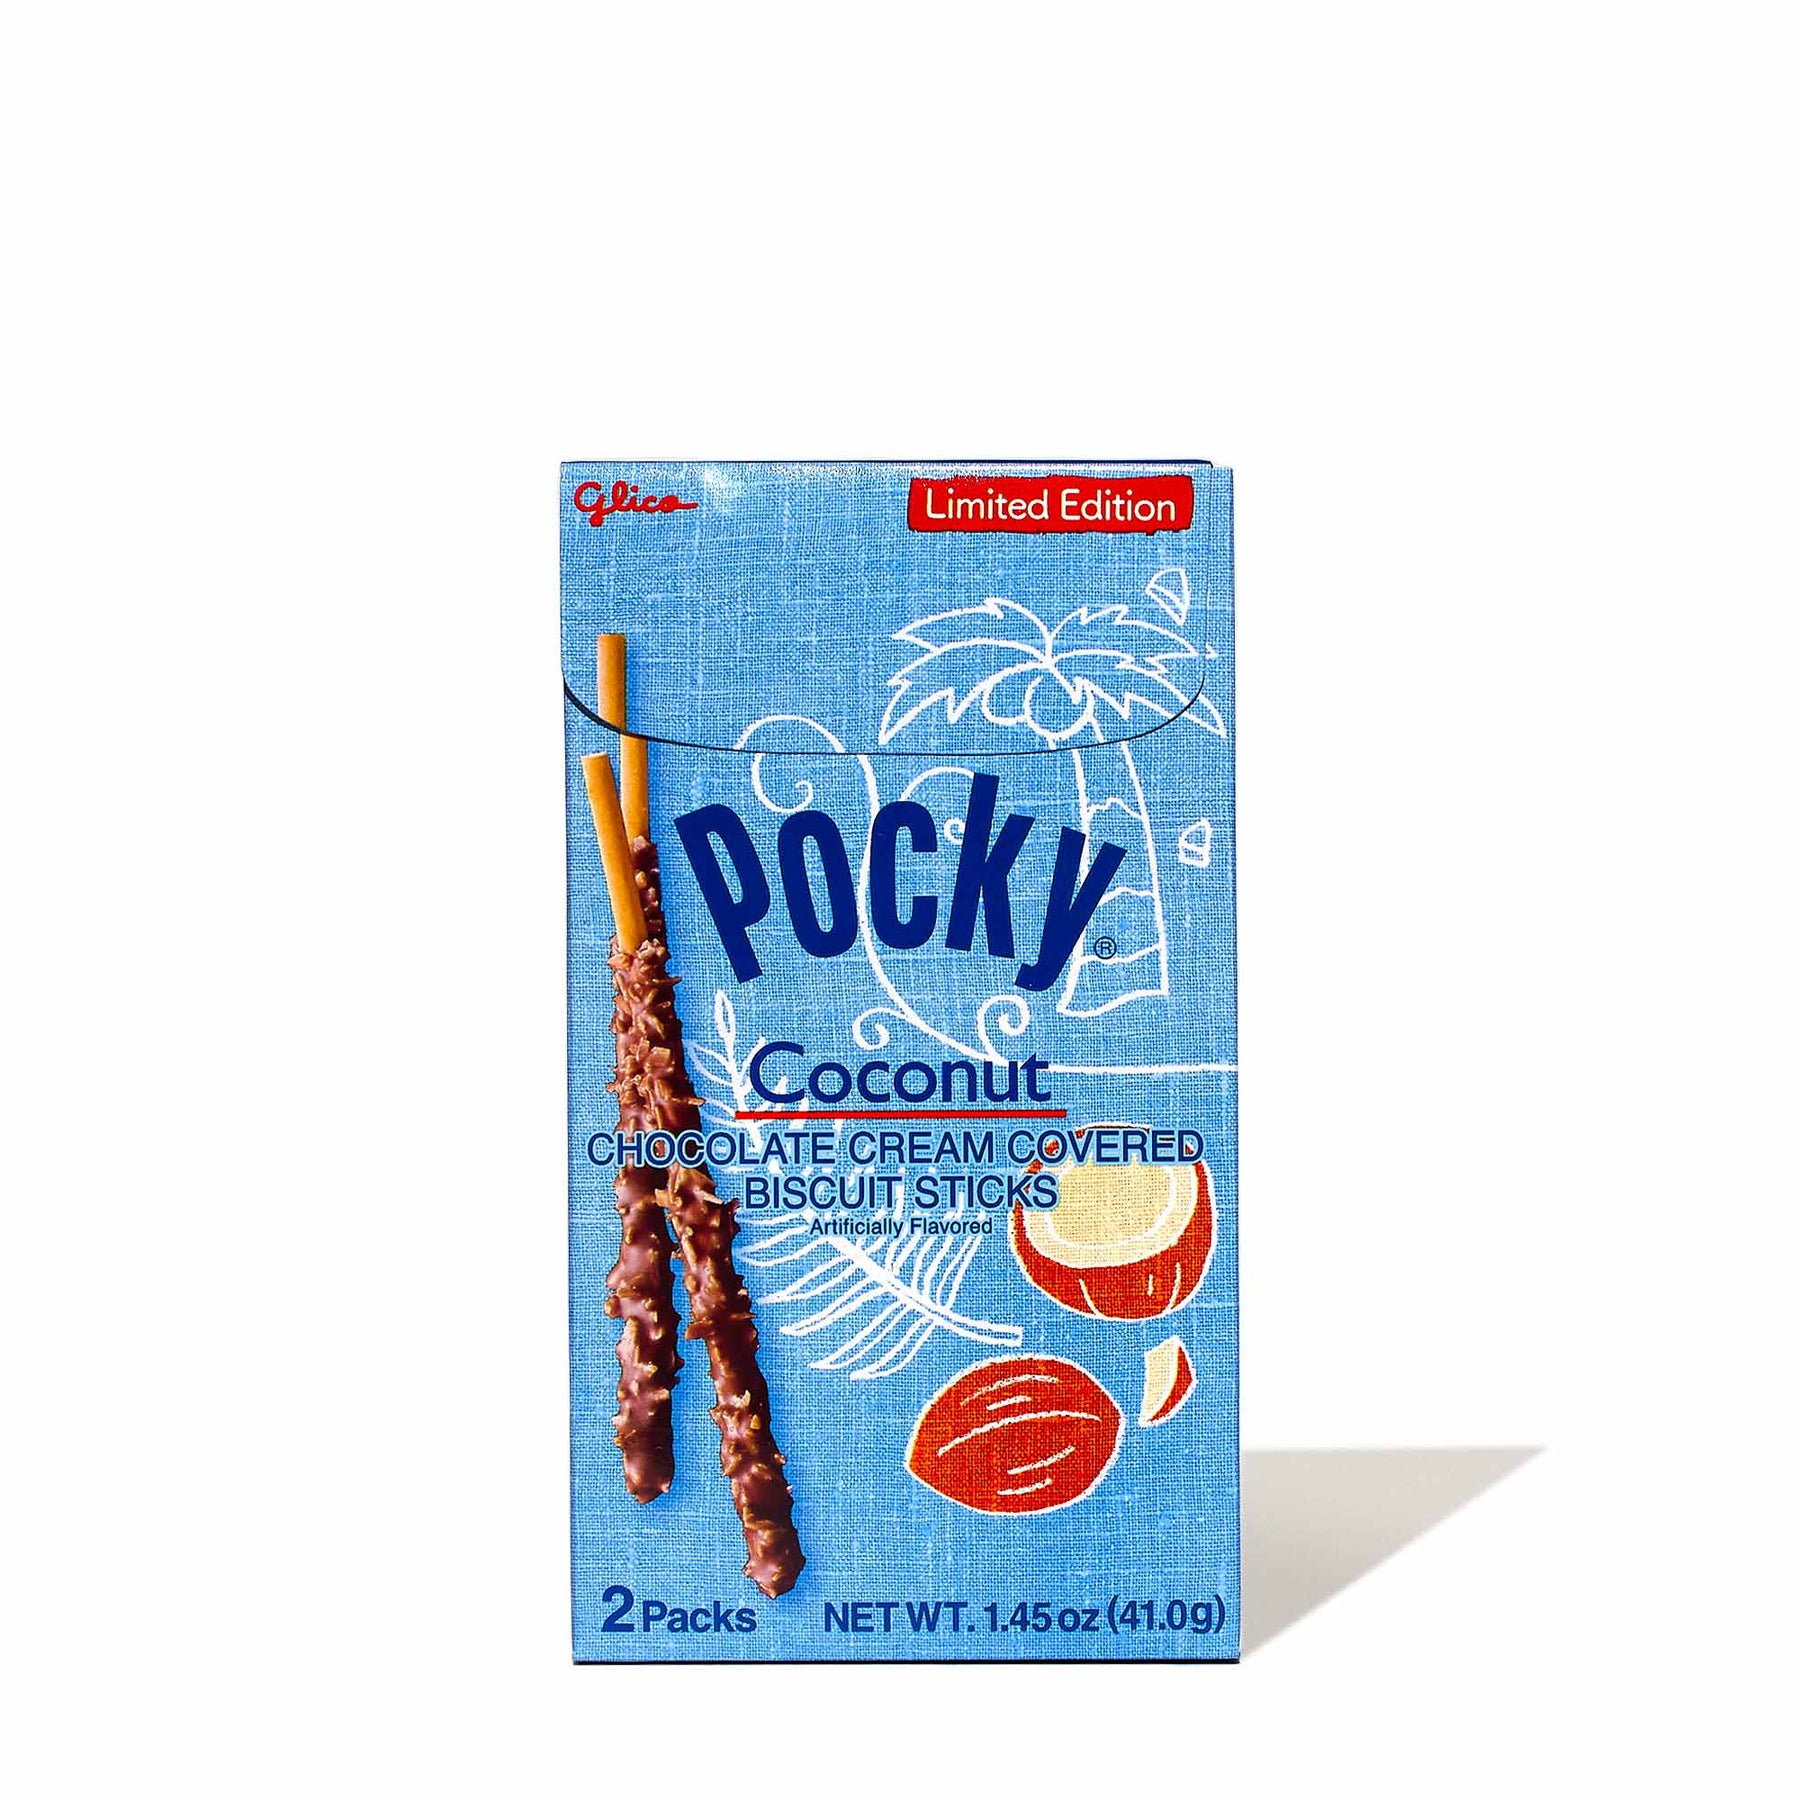 Glico Pocky - Cookies & Cream 2.47oz - Matcha Time Gift Shop